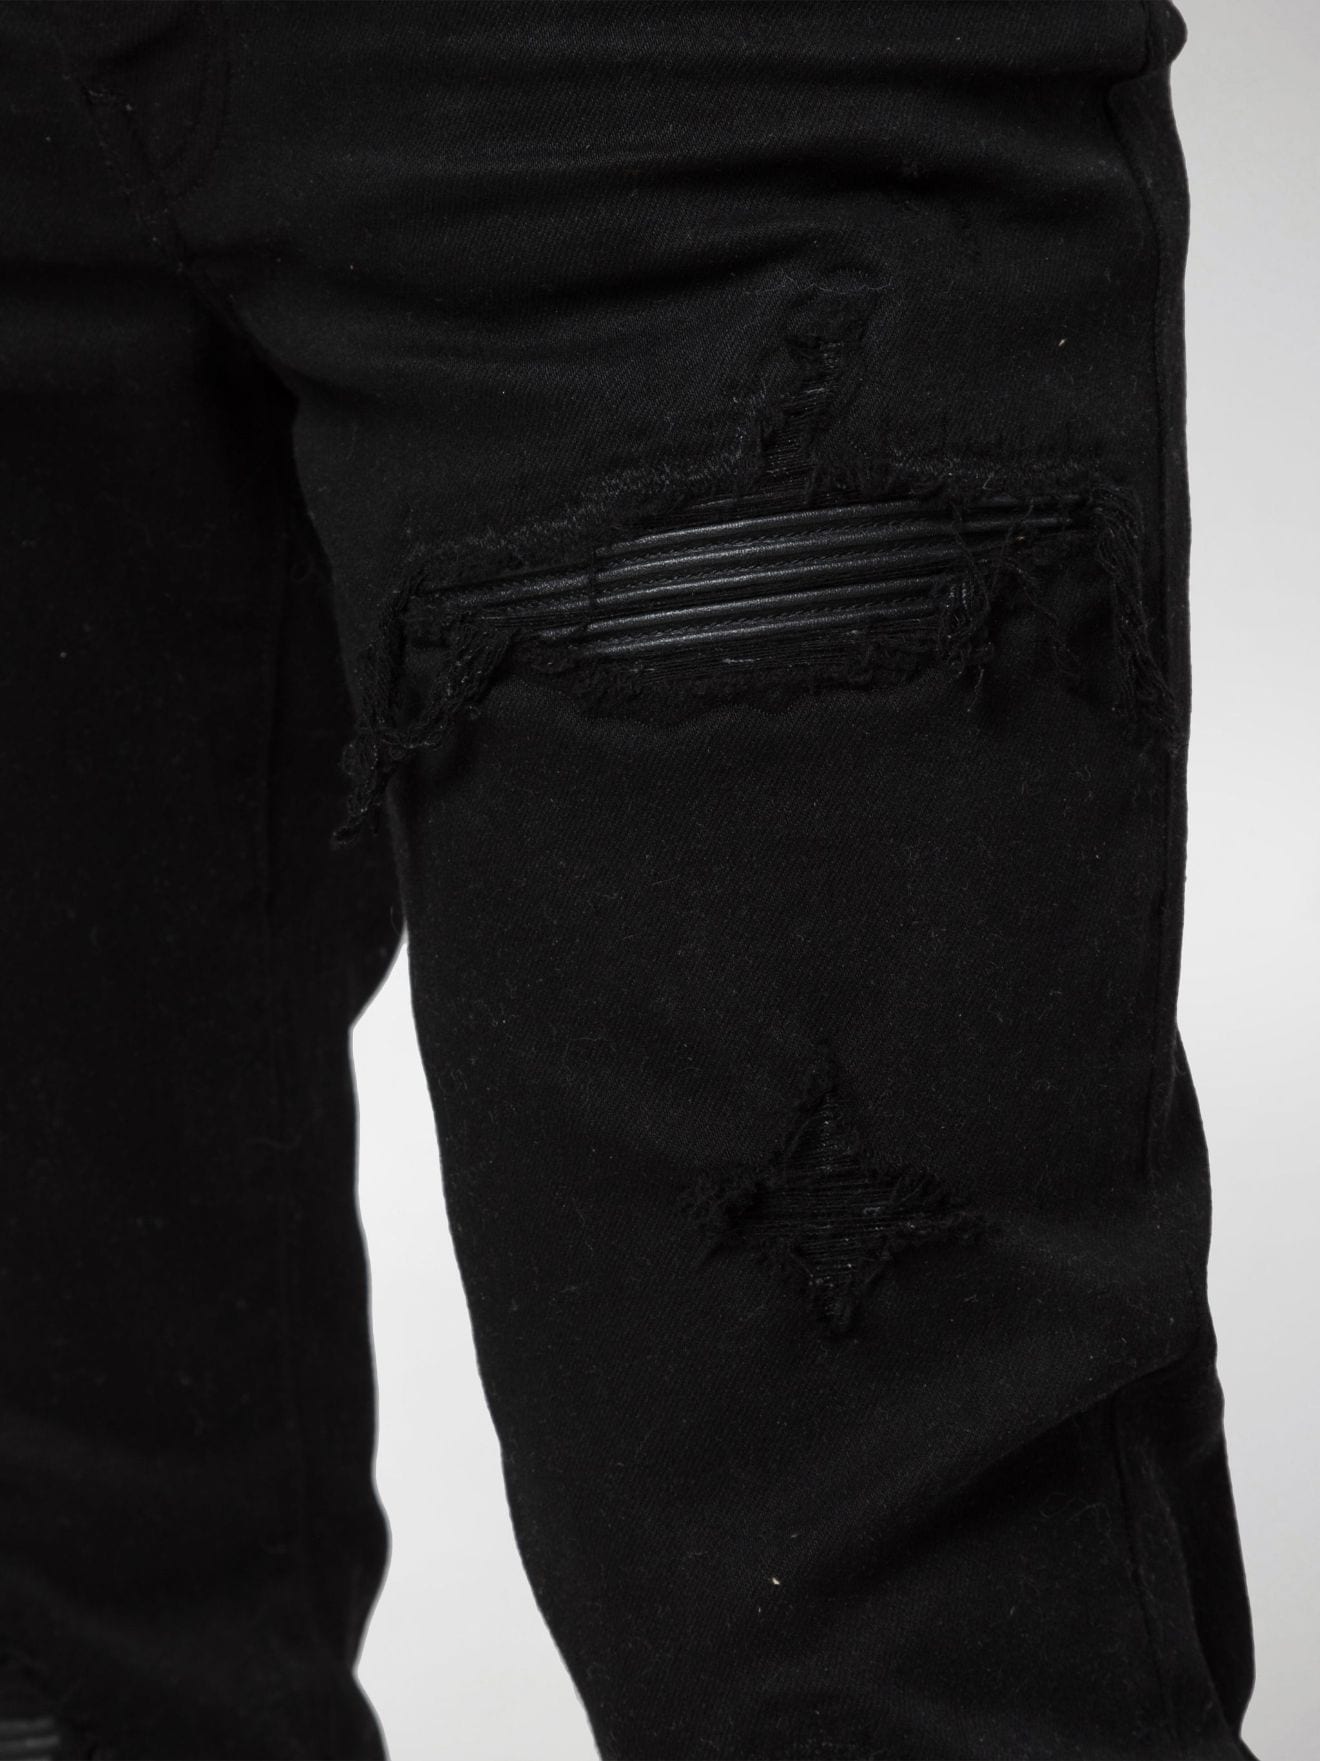 mx1 leather patch jean black